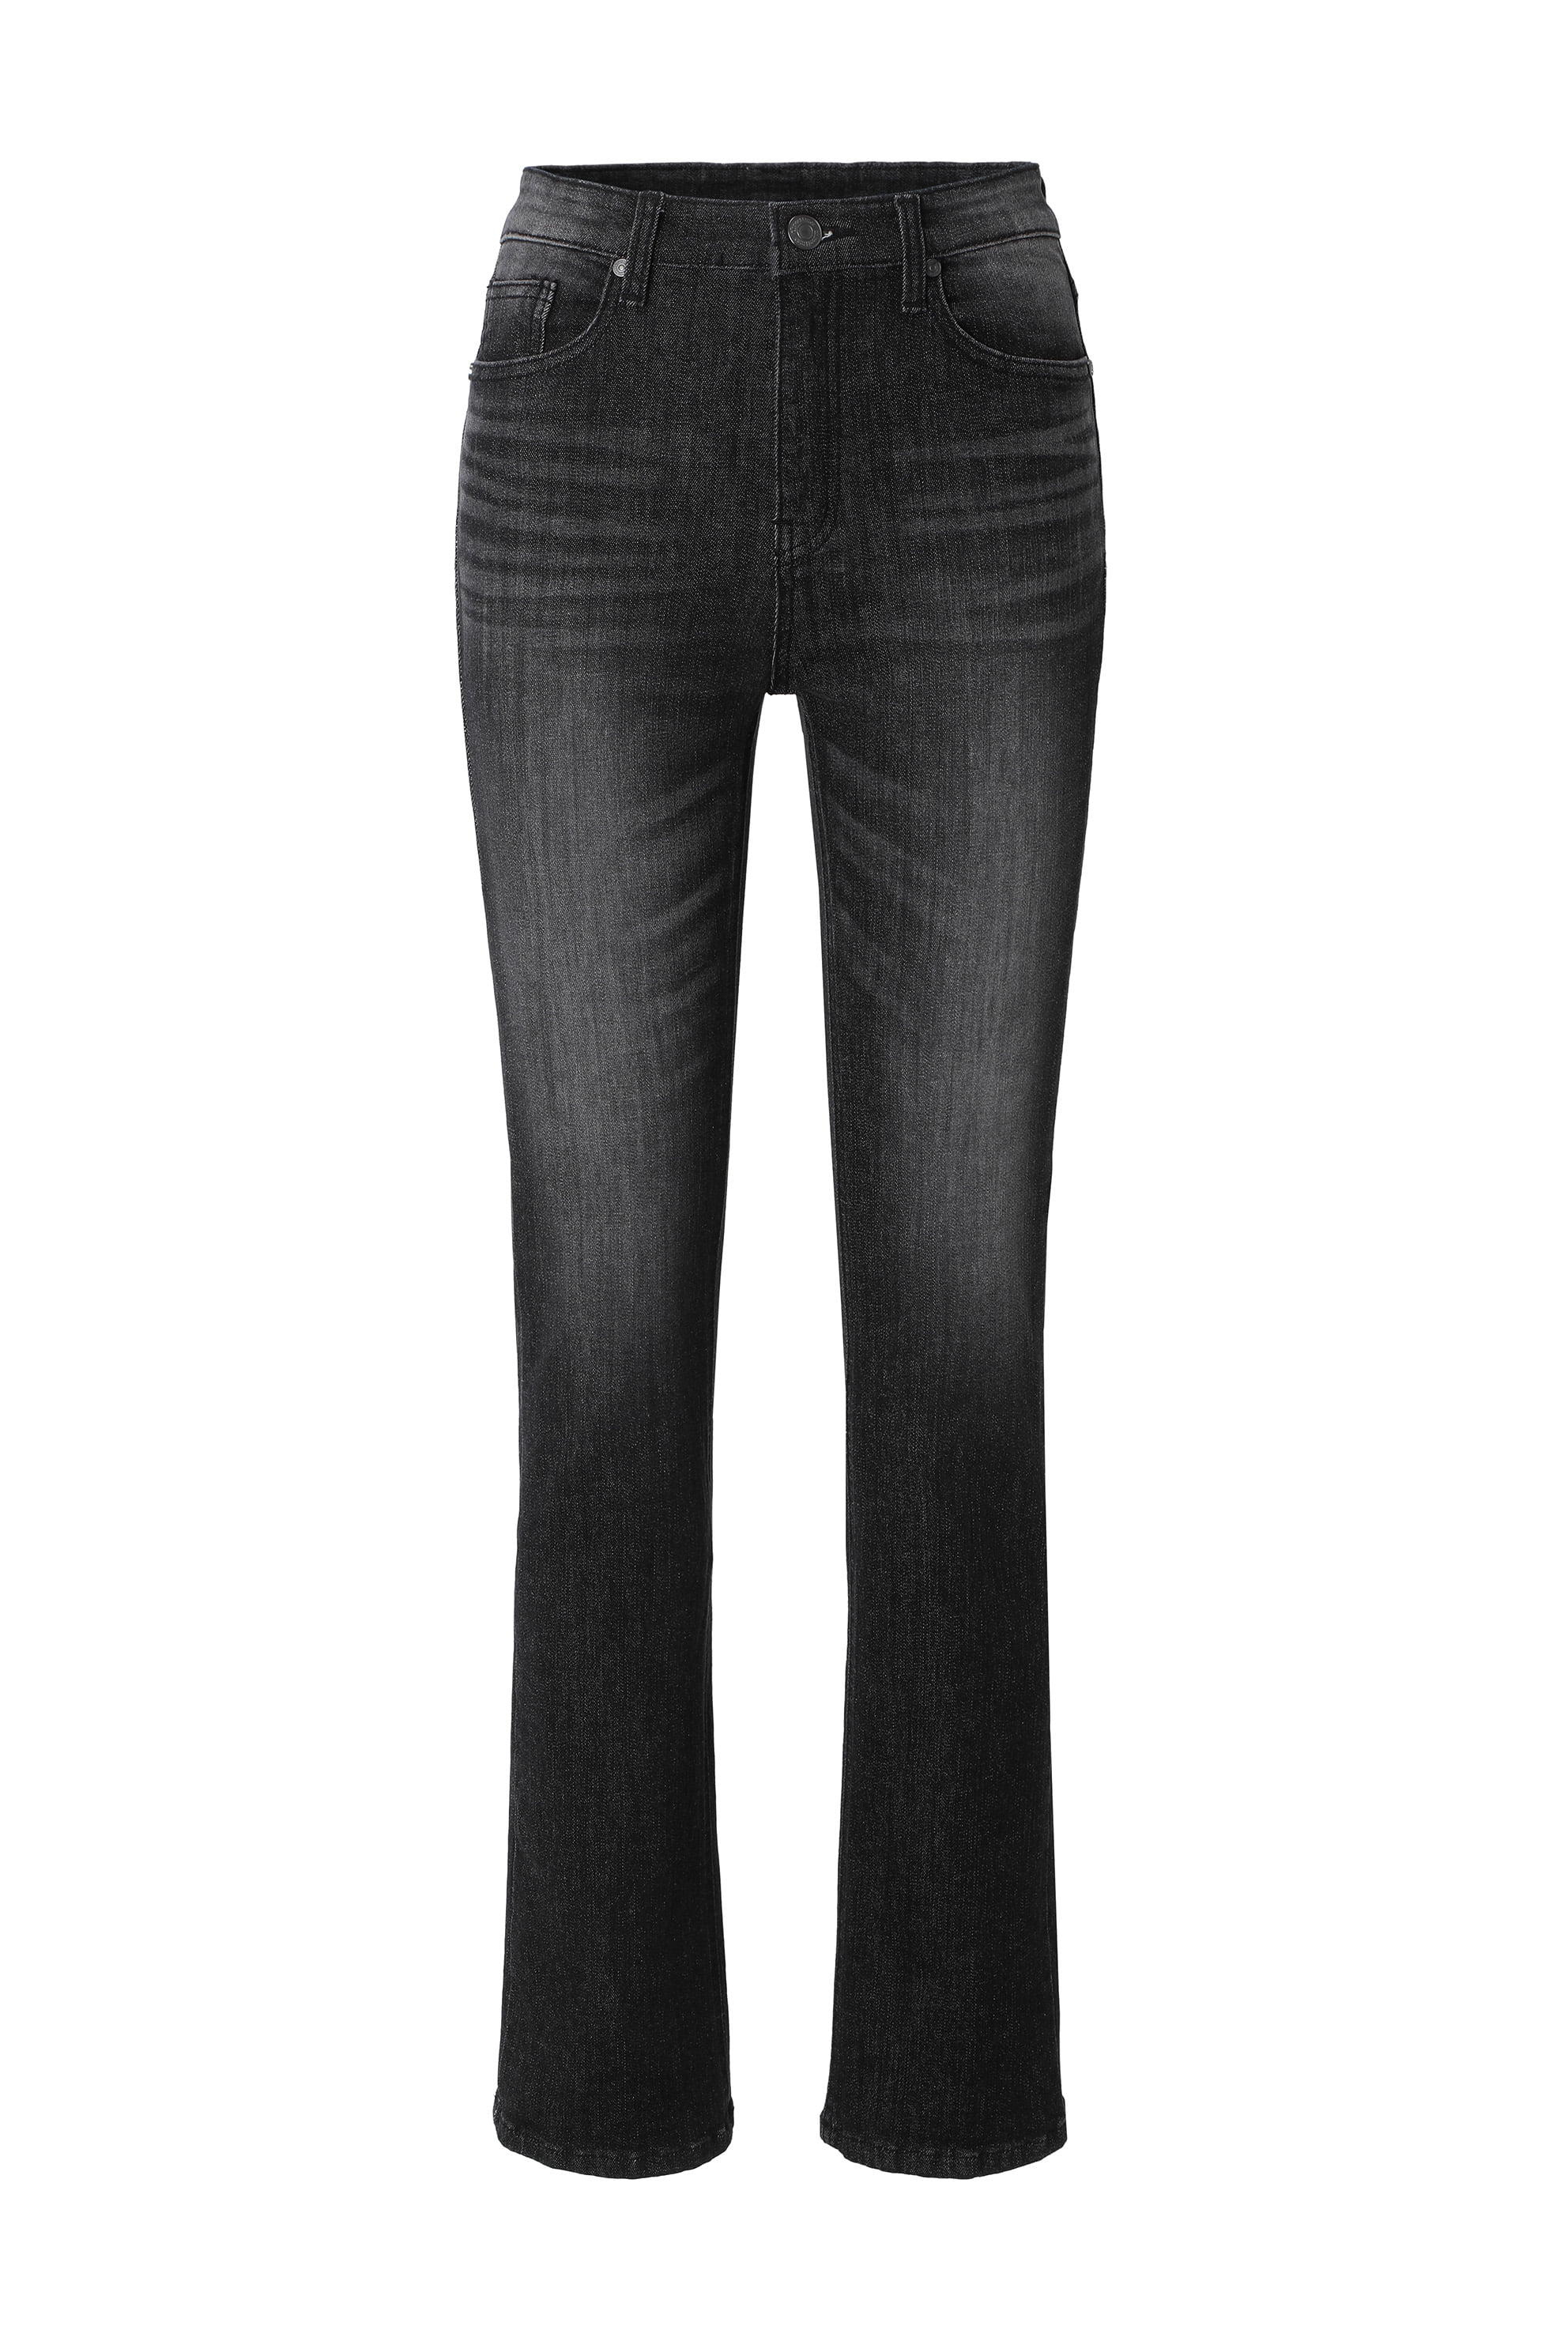 5501 Bootcut black jeans